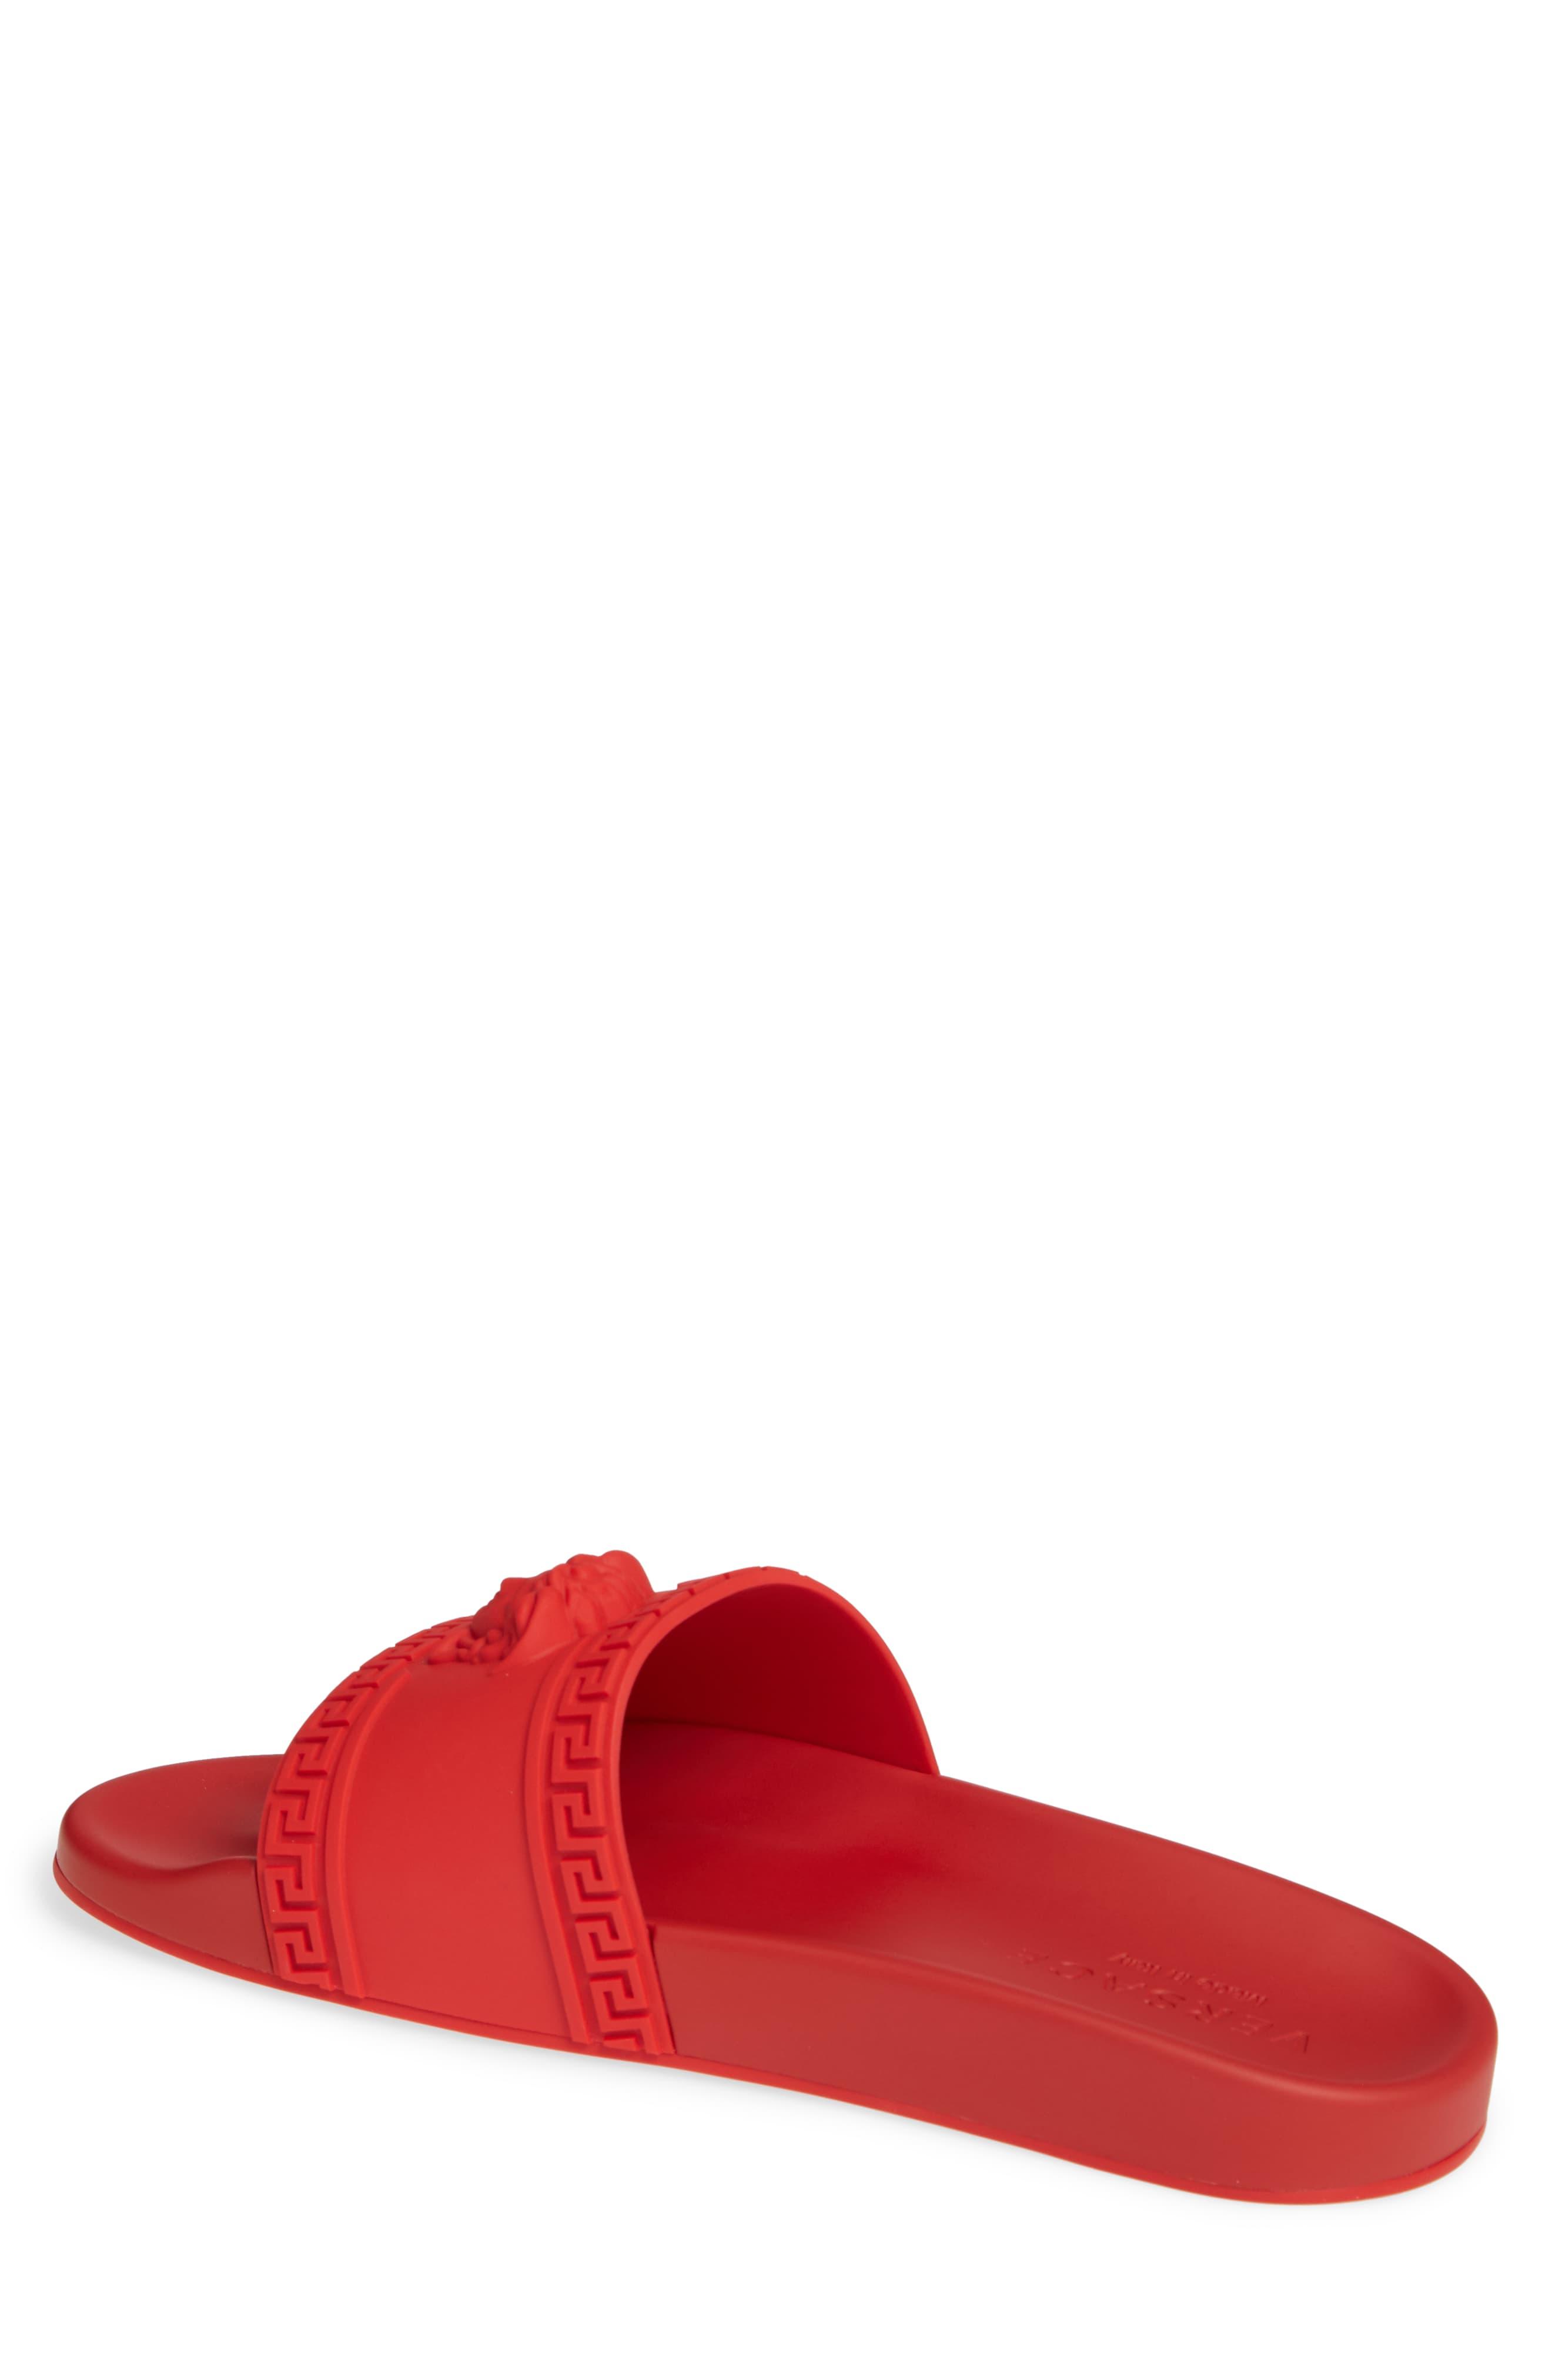 versace red slides